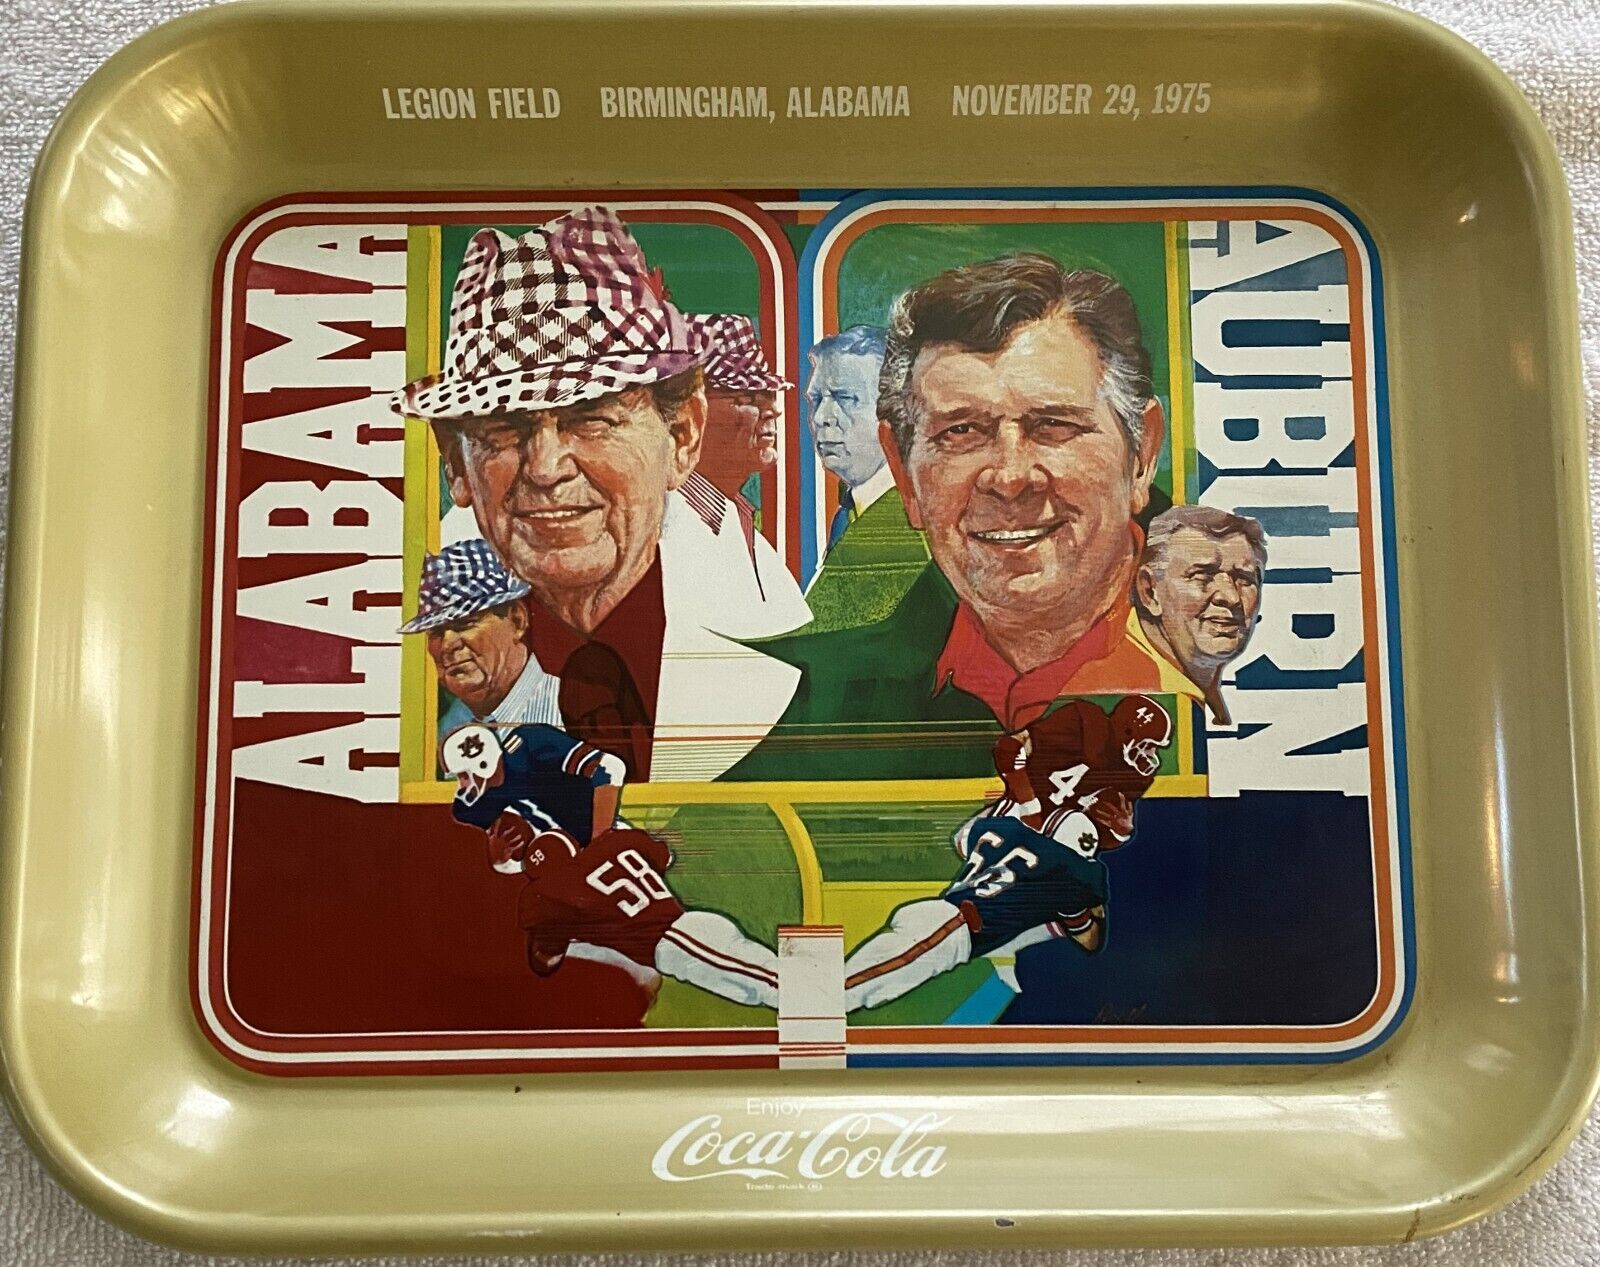 Vintage 1975 Coca-Cola Alabama vs Auburn Legion Field Metal Commemorative Tray